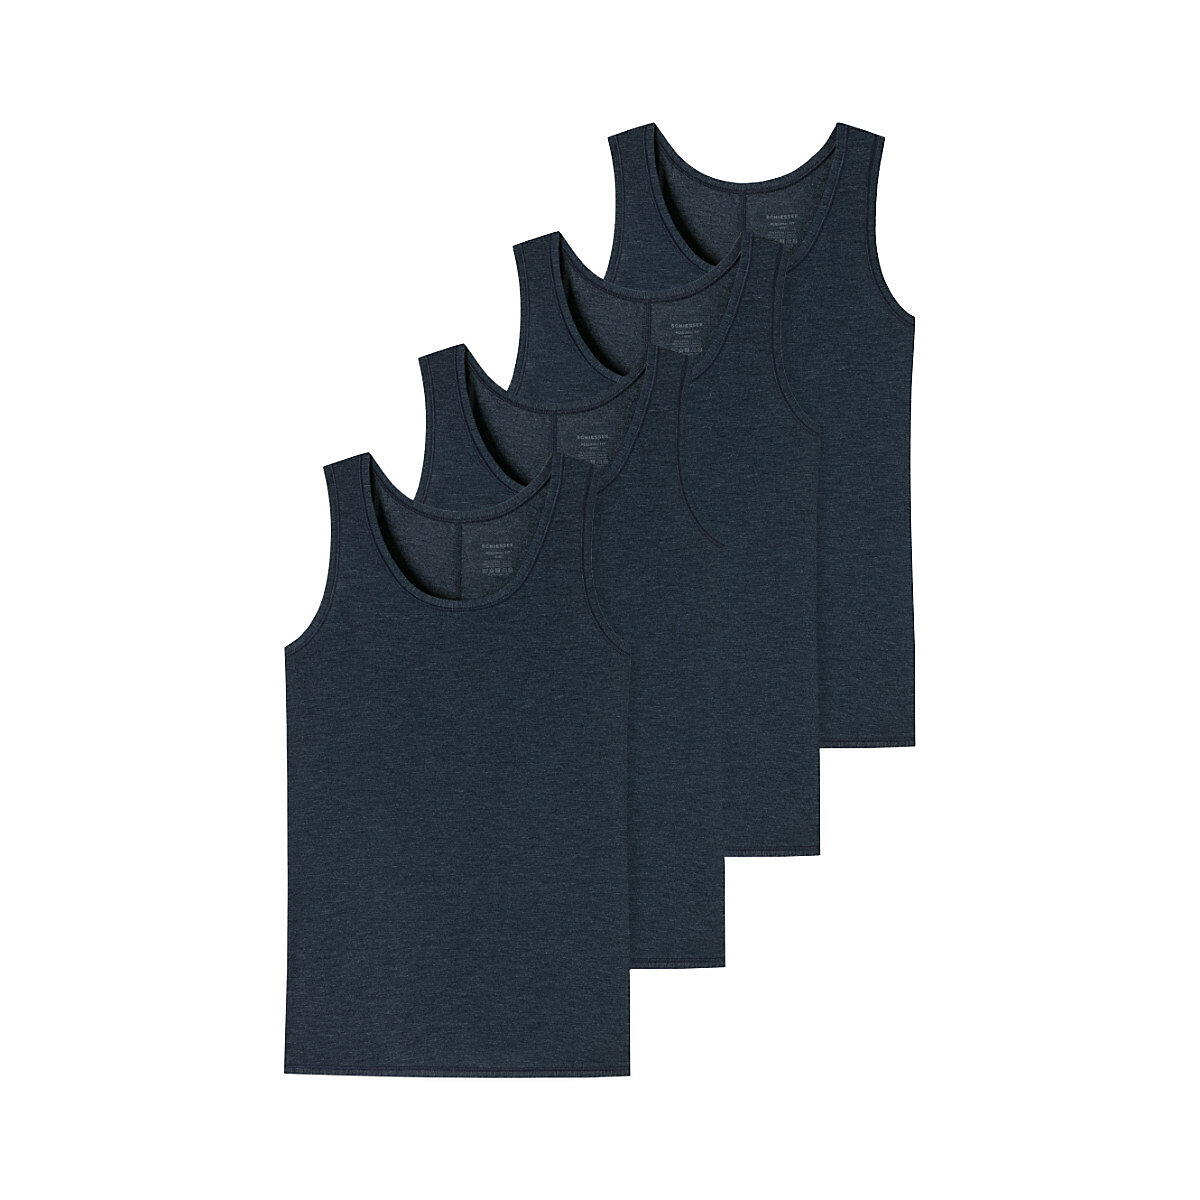 SCHIESSER Tank Tops / Unterhemden 4er Pack Teens Girls Personal Fit Unterhemden für Mädchen dunkelblau